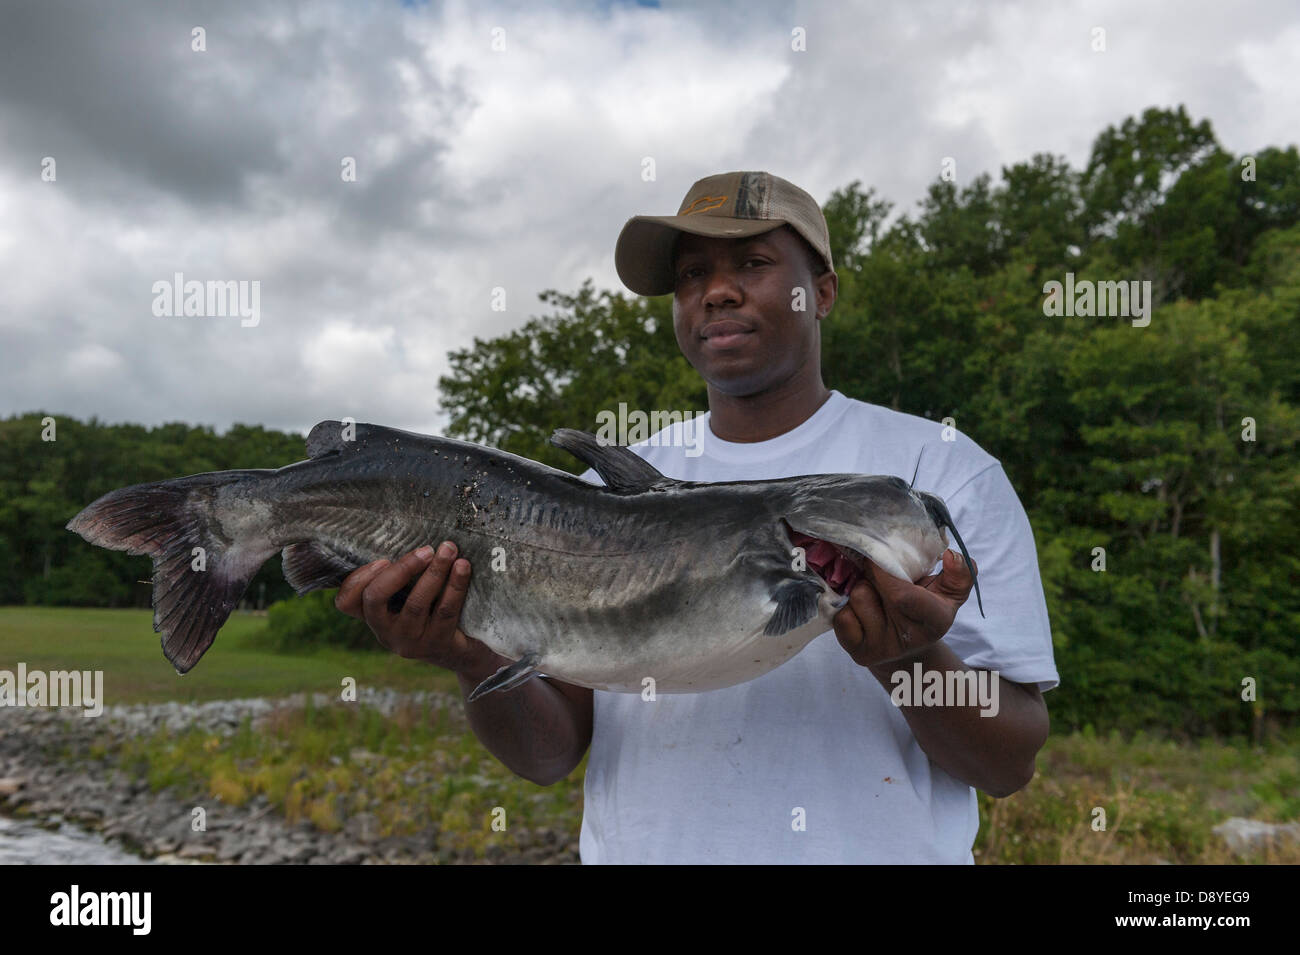 https://c8.alamy.com/comp/D8YEG9/fishing-for-catfish-at-the-rodman-dam-on-the-ocklawaha-river-in-marion-D8YEG9.jpg